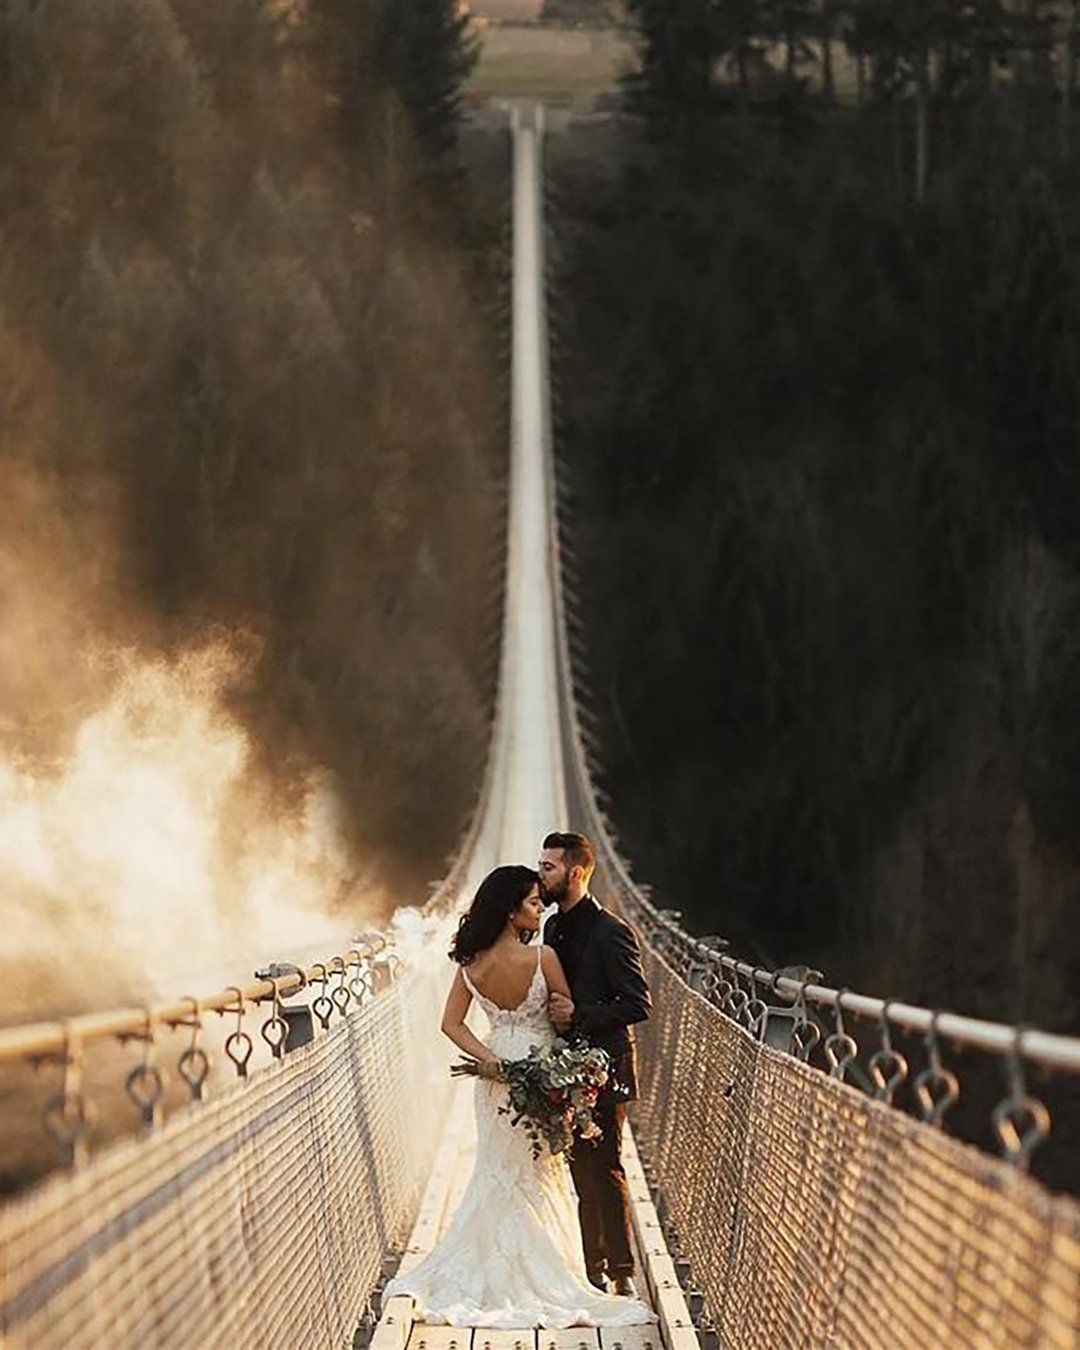 creative wedding photo ideas poses couple on bridge sbingraphy